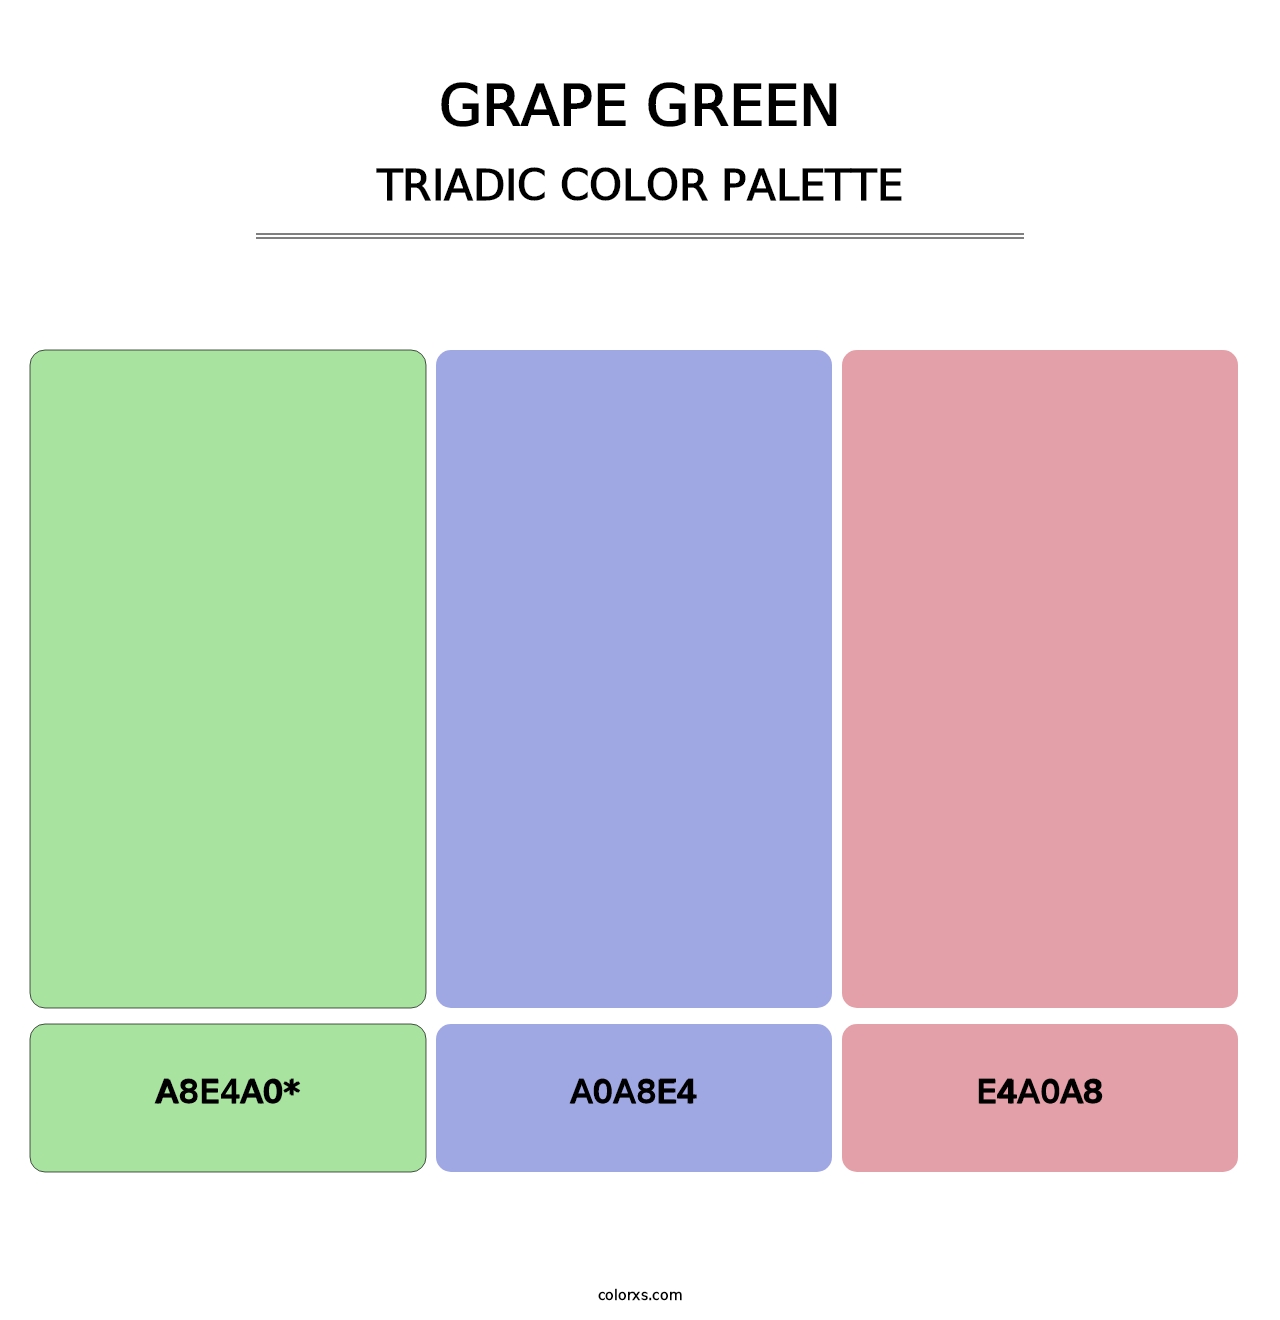 Grape Green - Triadic Color Palette